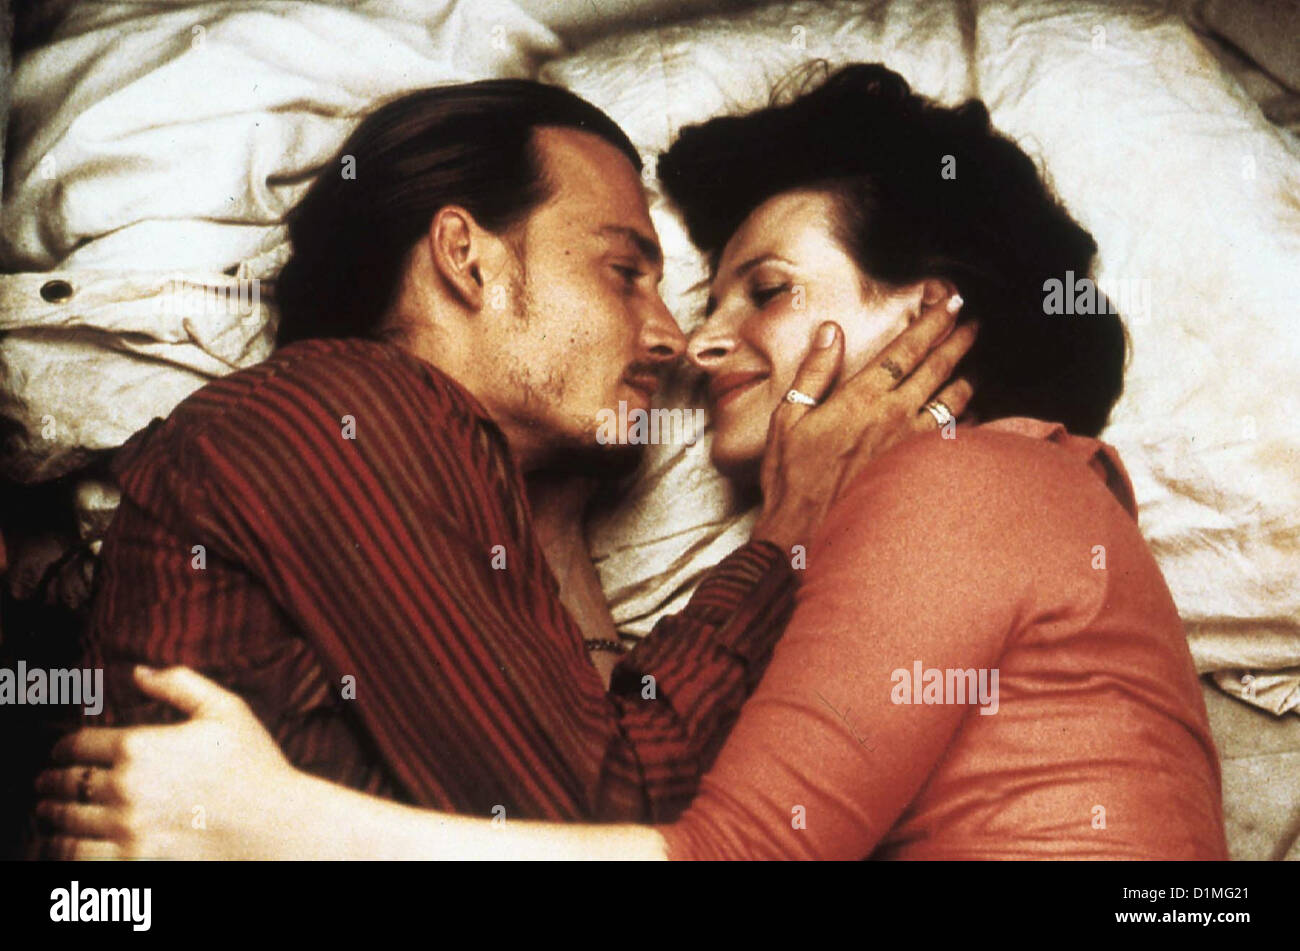 Chocolat   Chocolat   Roux (Johnny Depp), Vianne (Juliette Binoche) *** Local Caption *** 2000  Senator Film Stock Photo